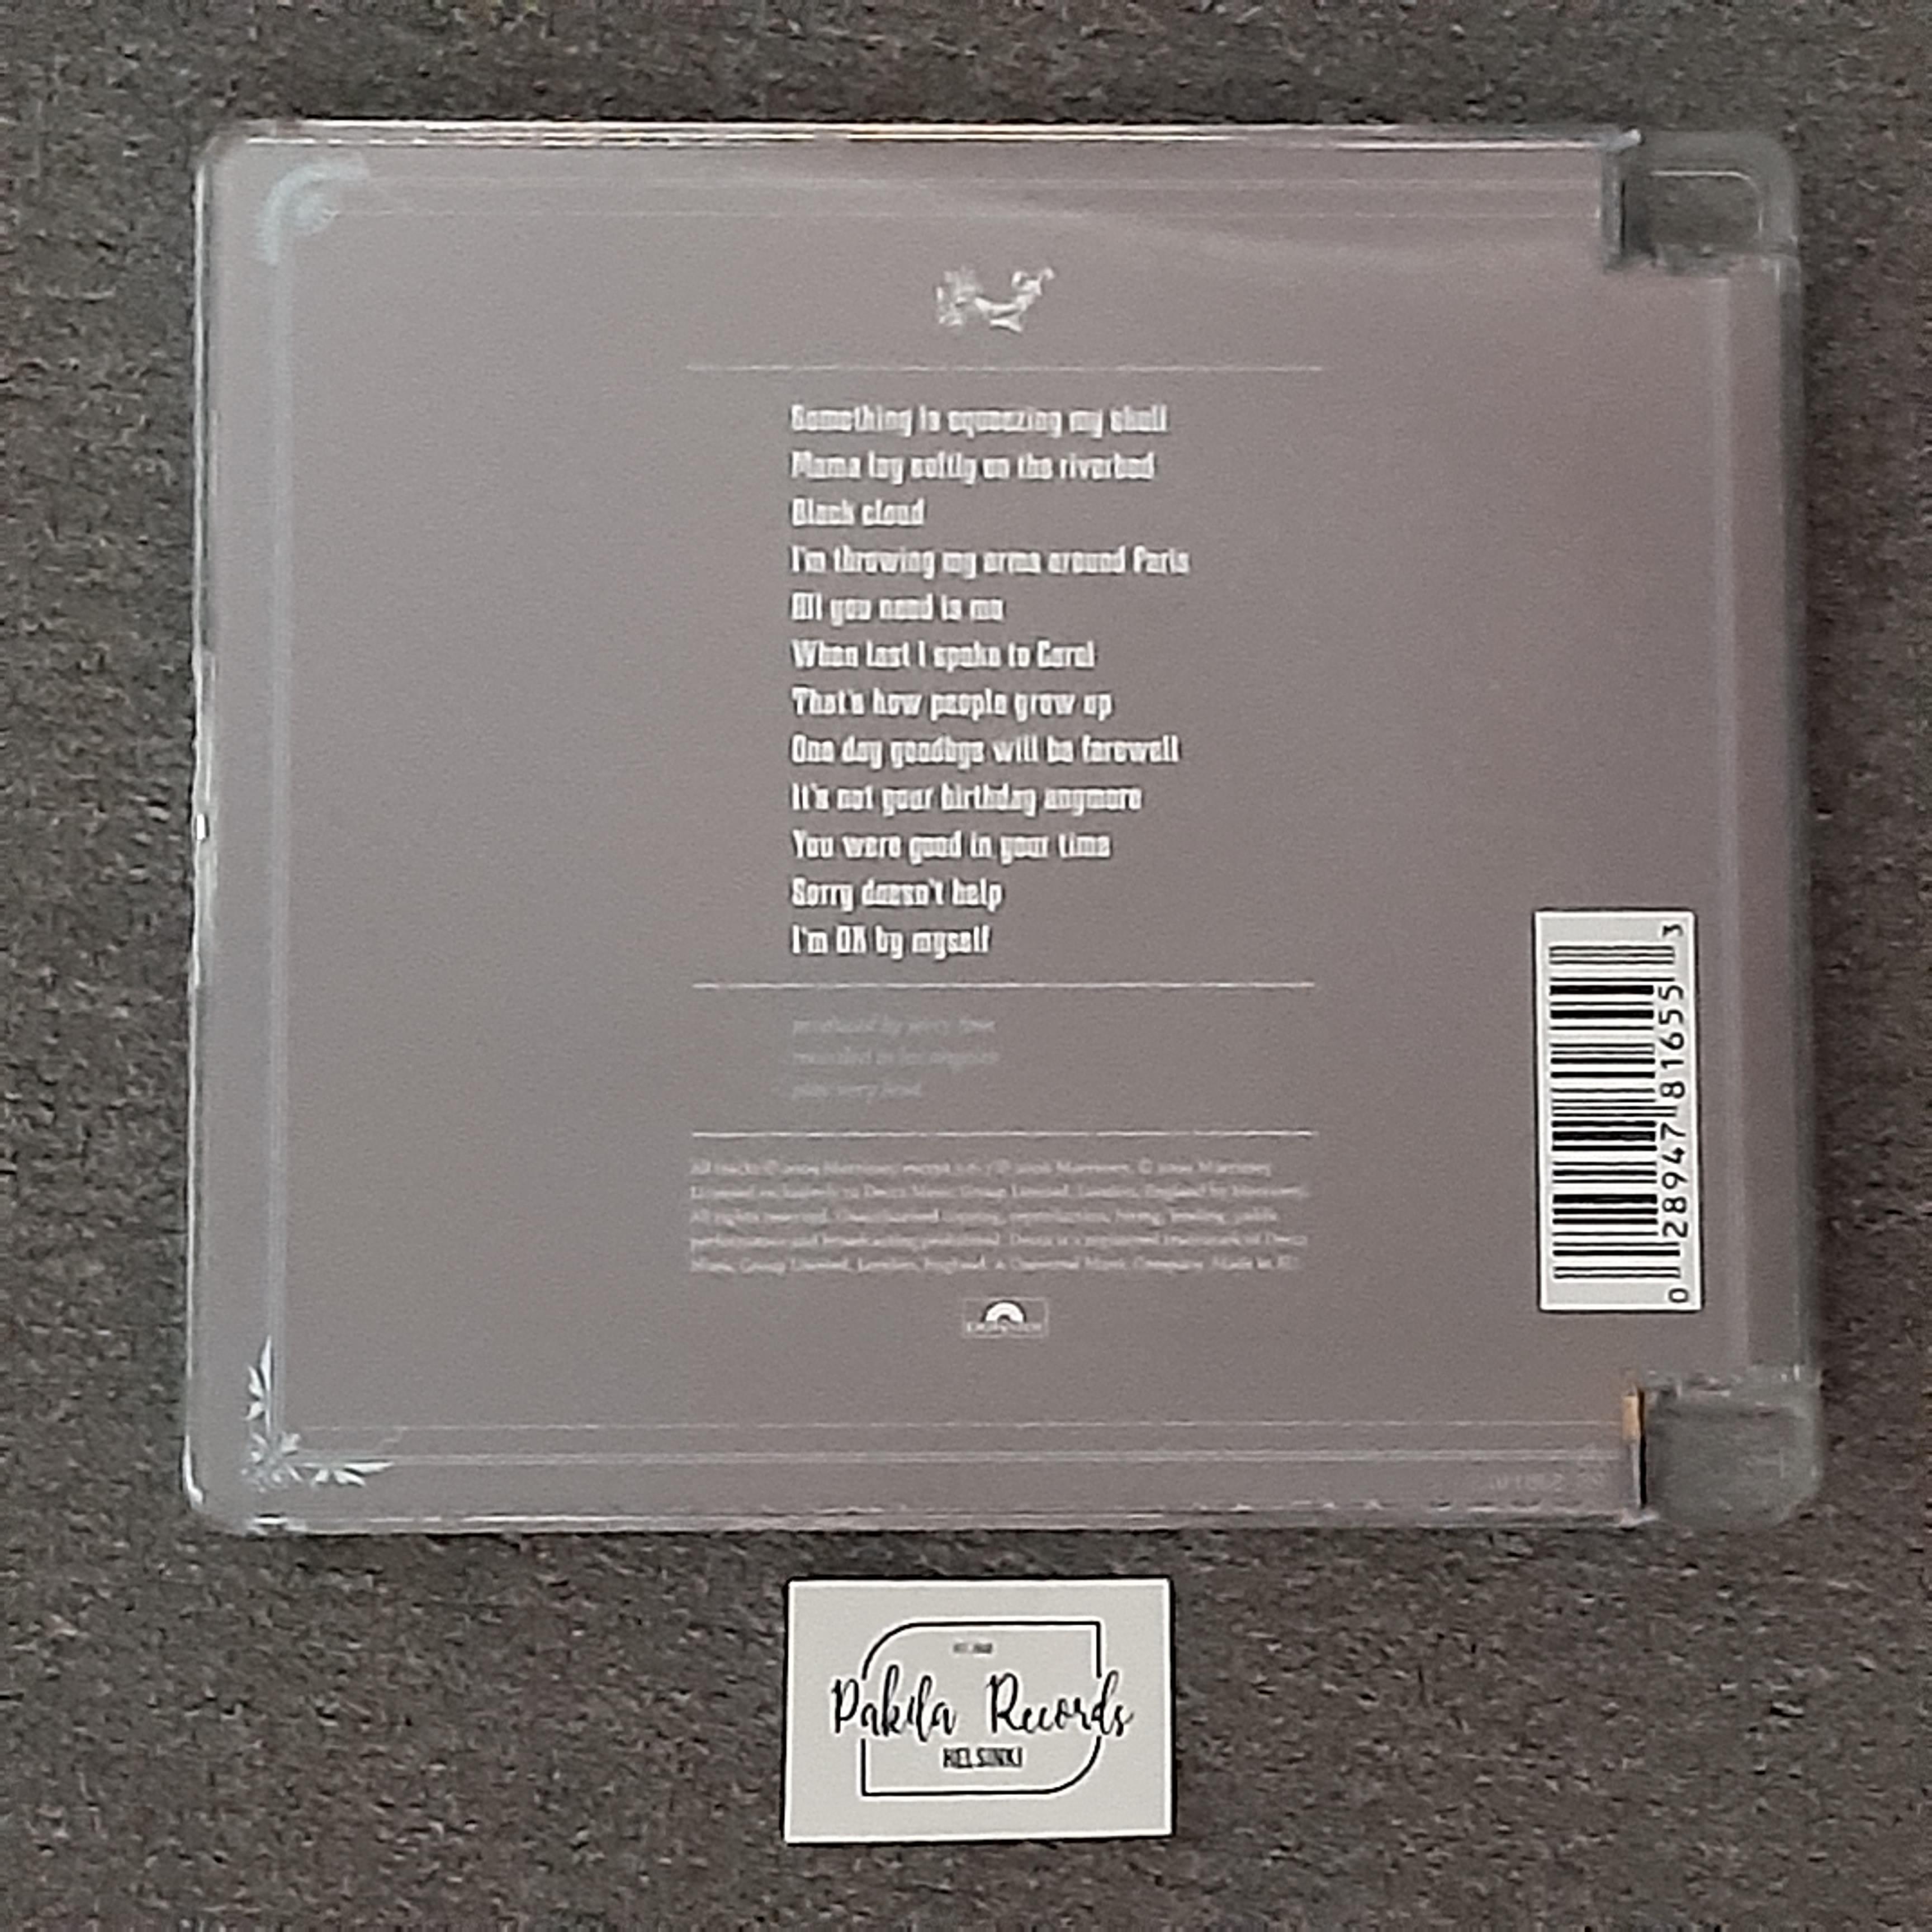 Morrissey - Years Of Refusal - CD (käytetty)